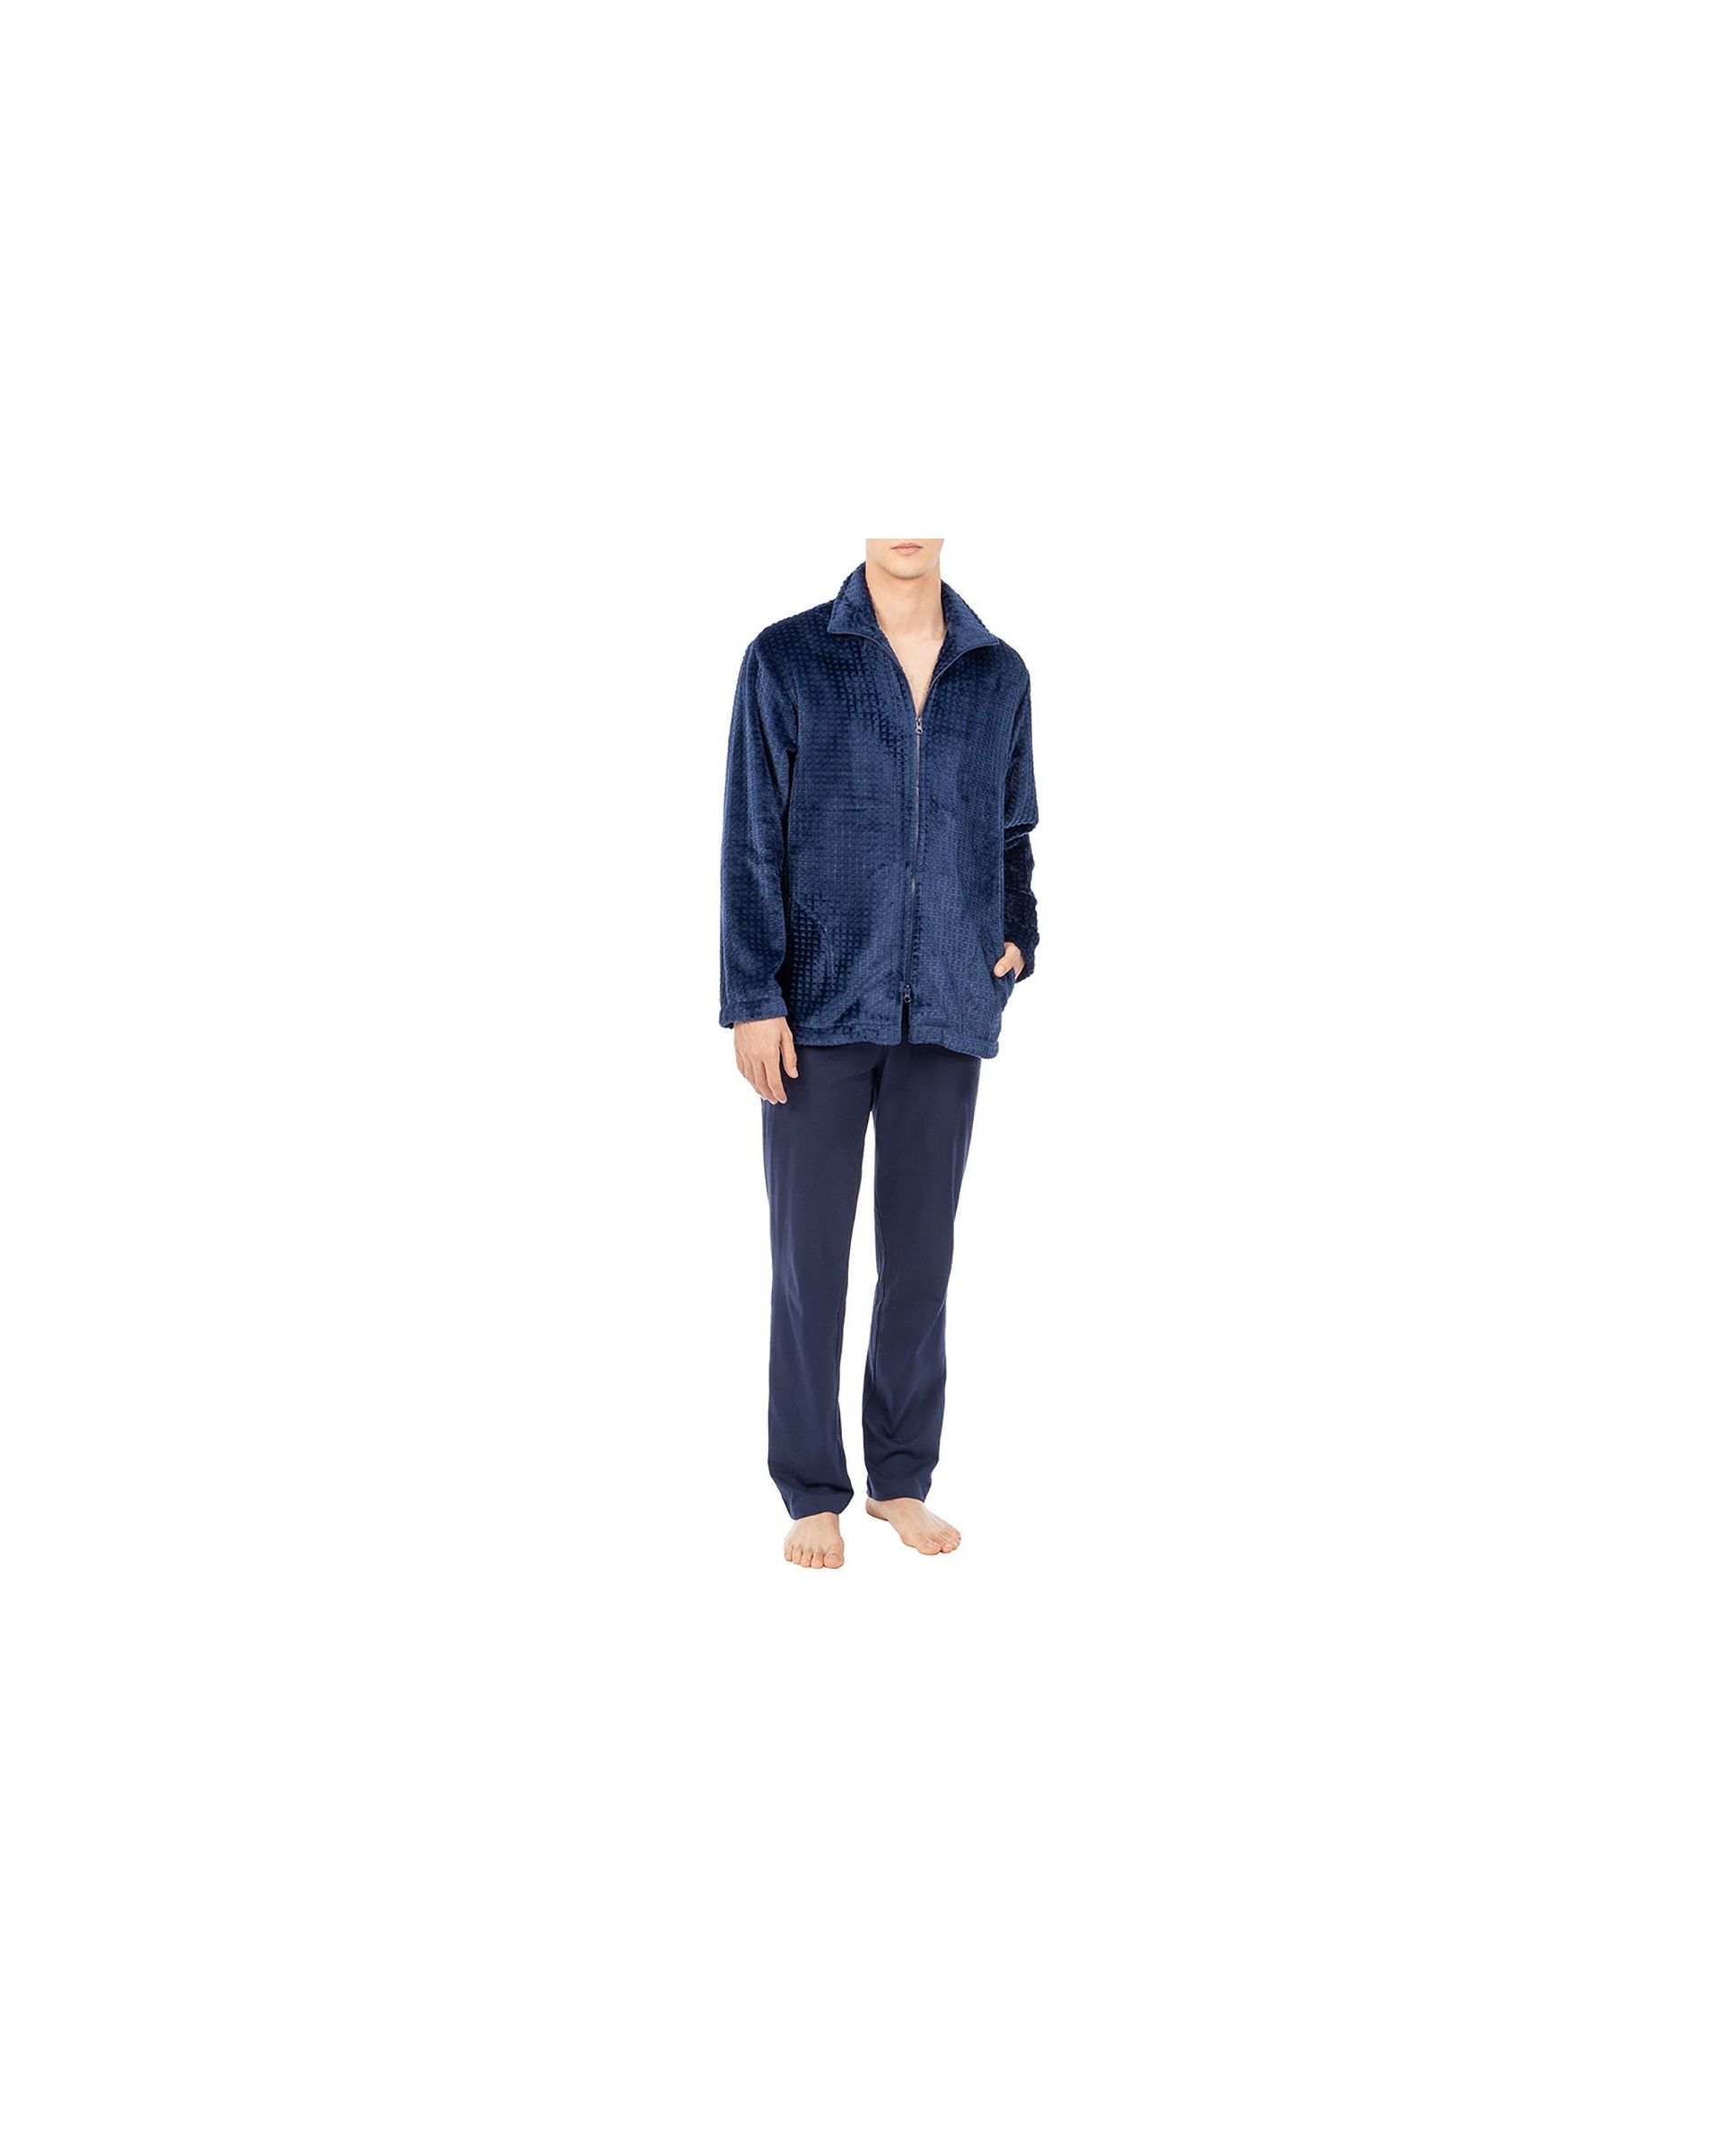 Men's short winter coat, blue jaquard zip fastening